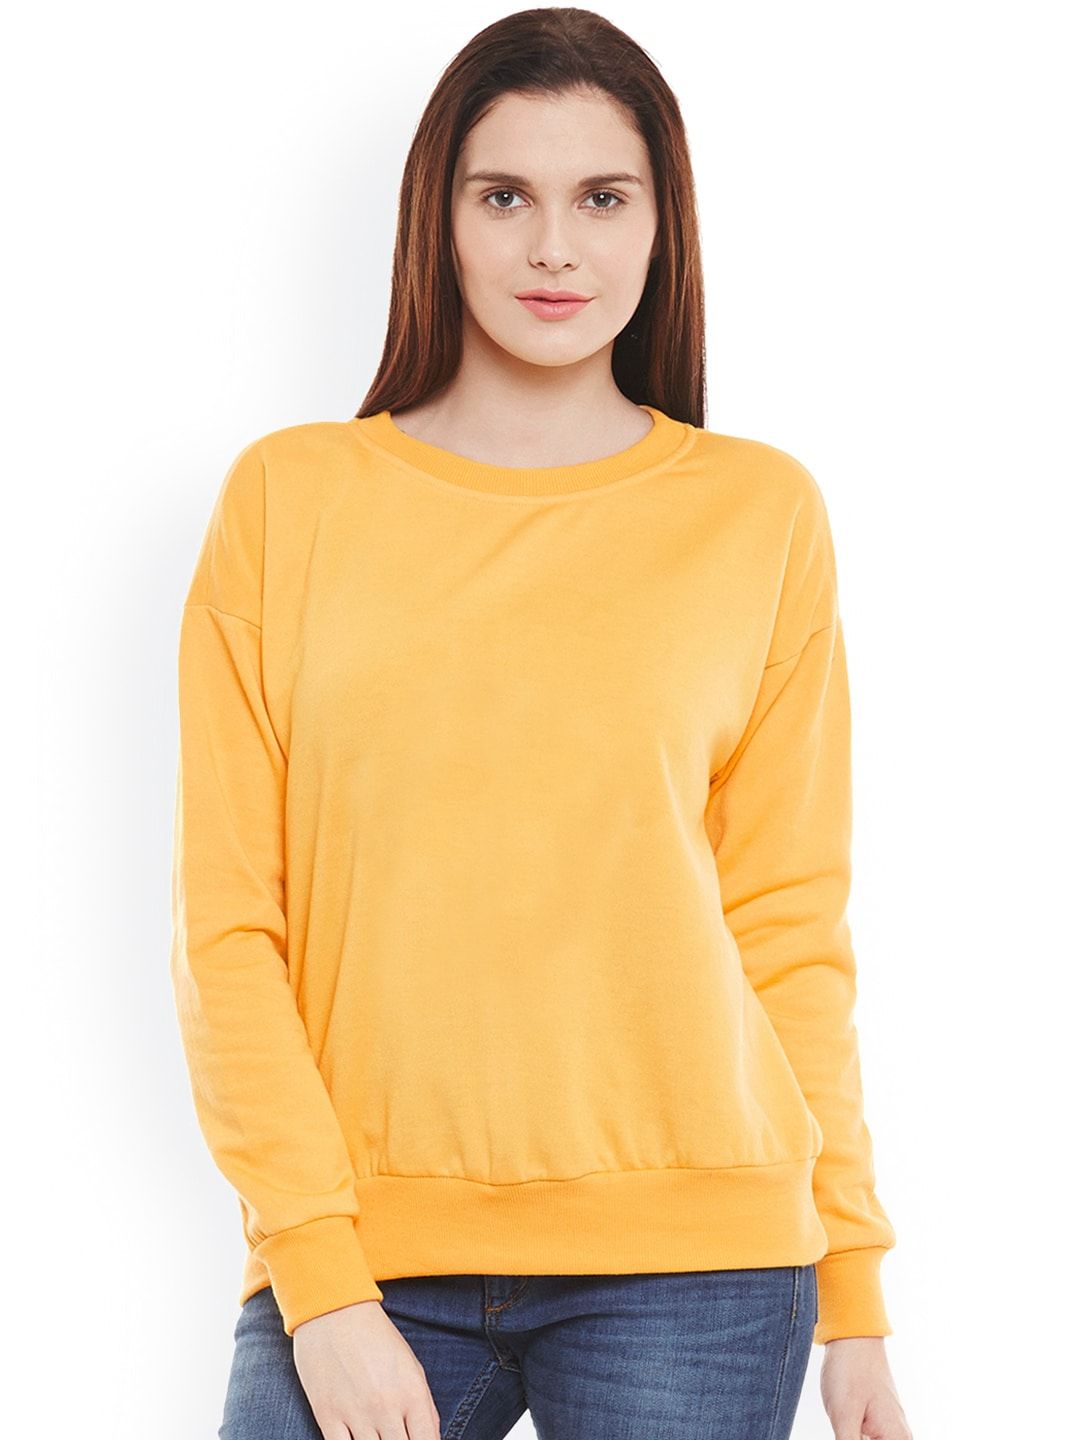 Belle Fille  Yellow Sweatshirt Price in India